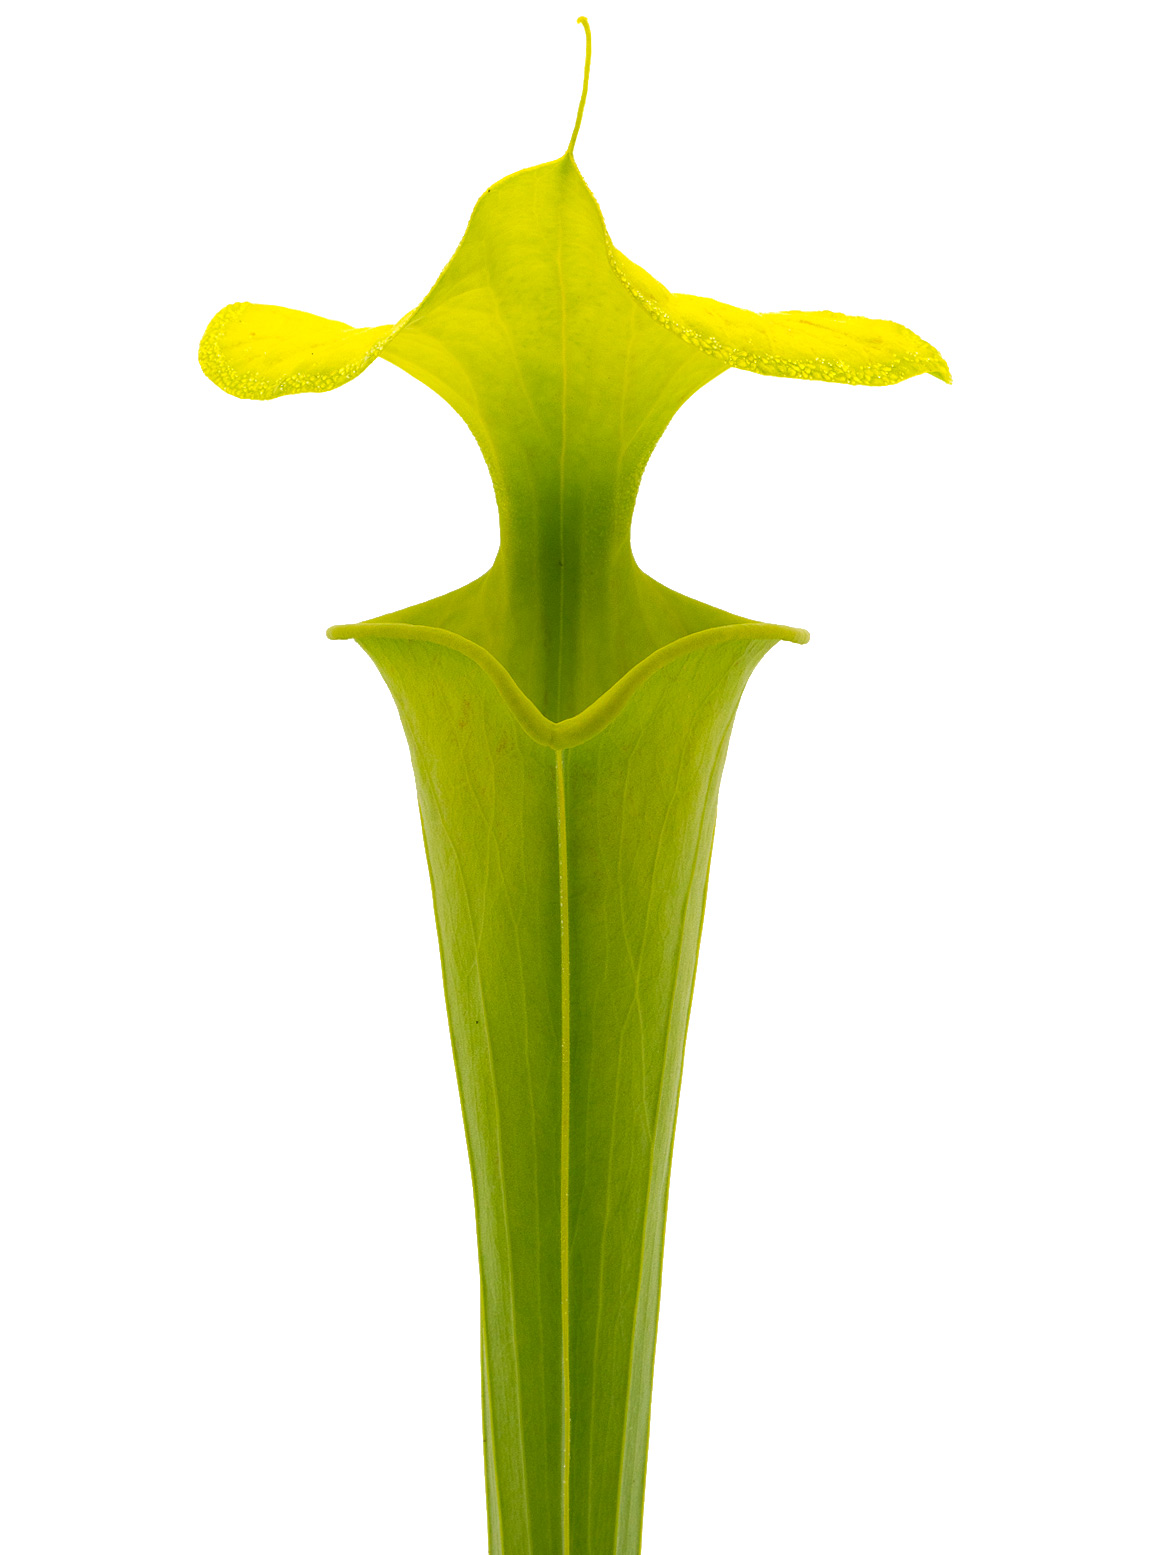 Sarracenia flava var. maxima - MK F91, large green form, North Carolina